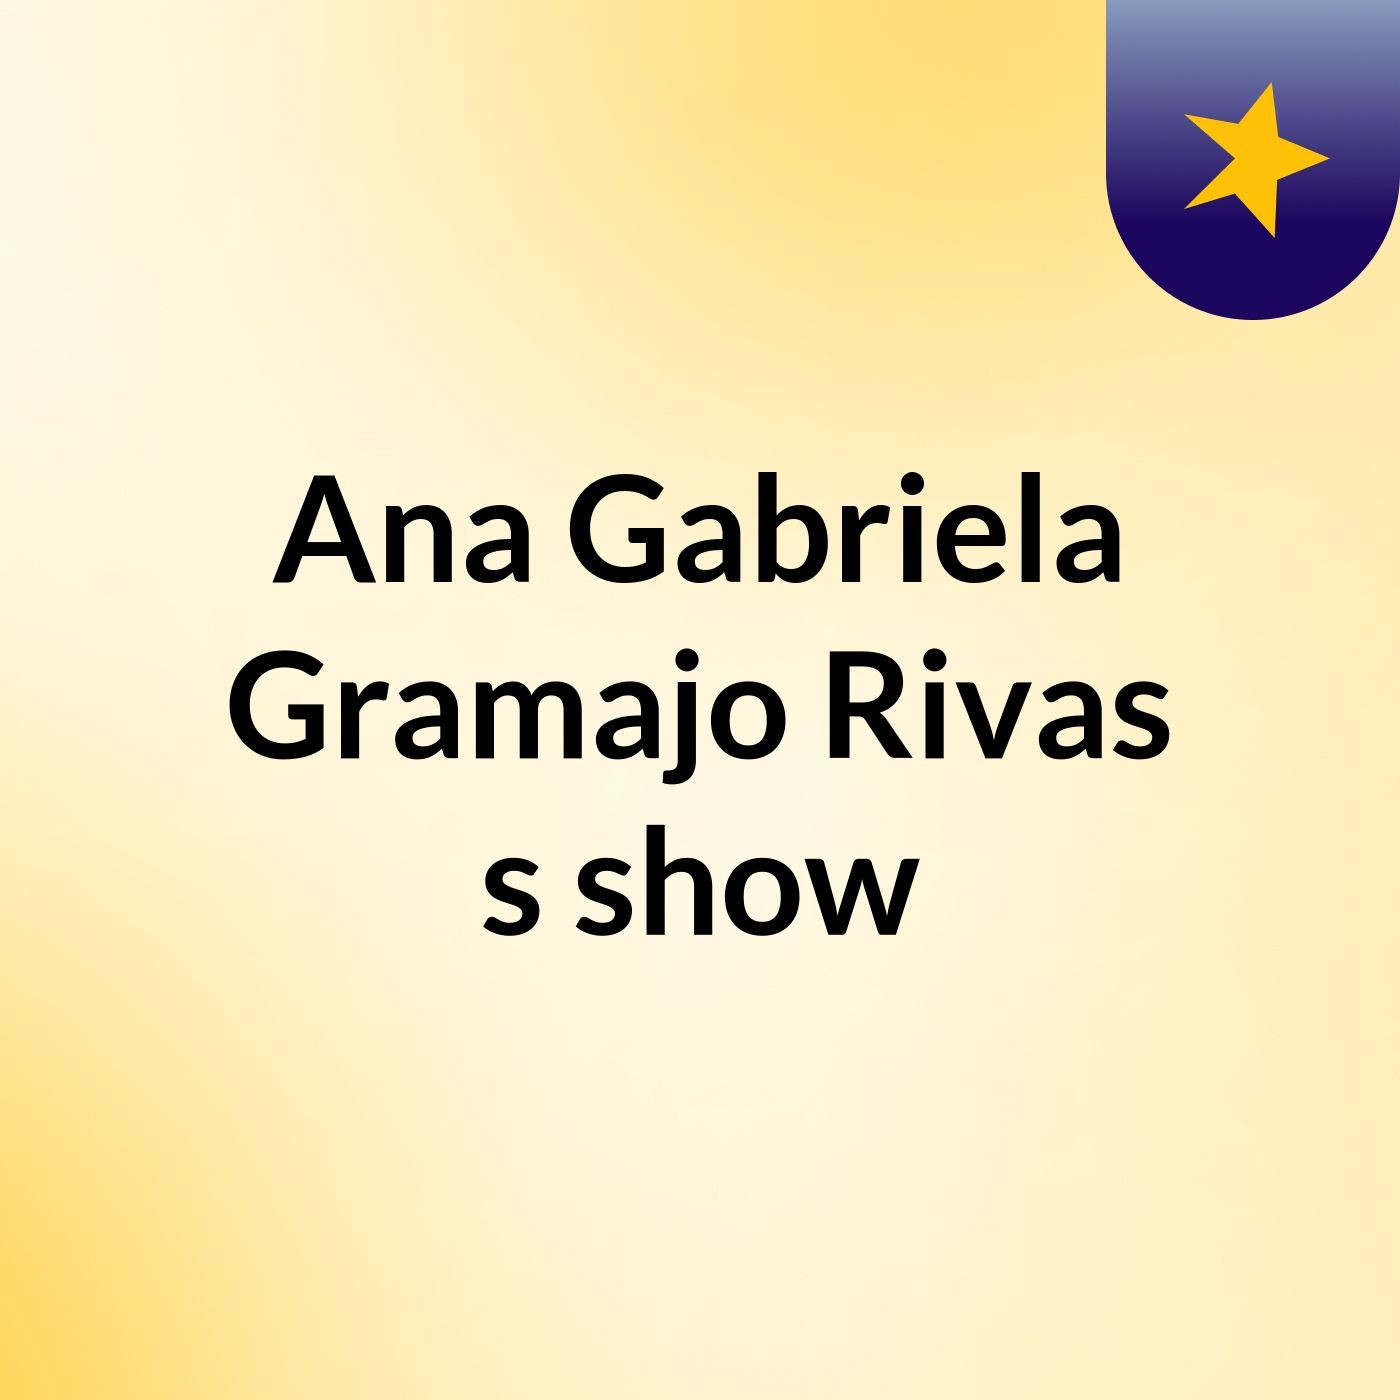 Ana Gabriela Gramajo Rivas's show